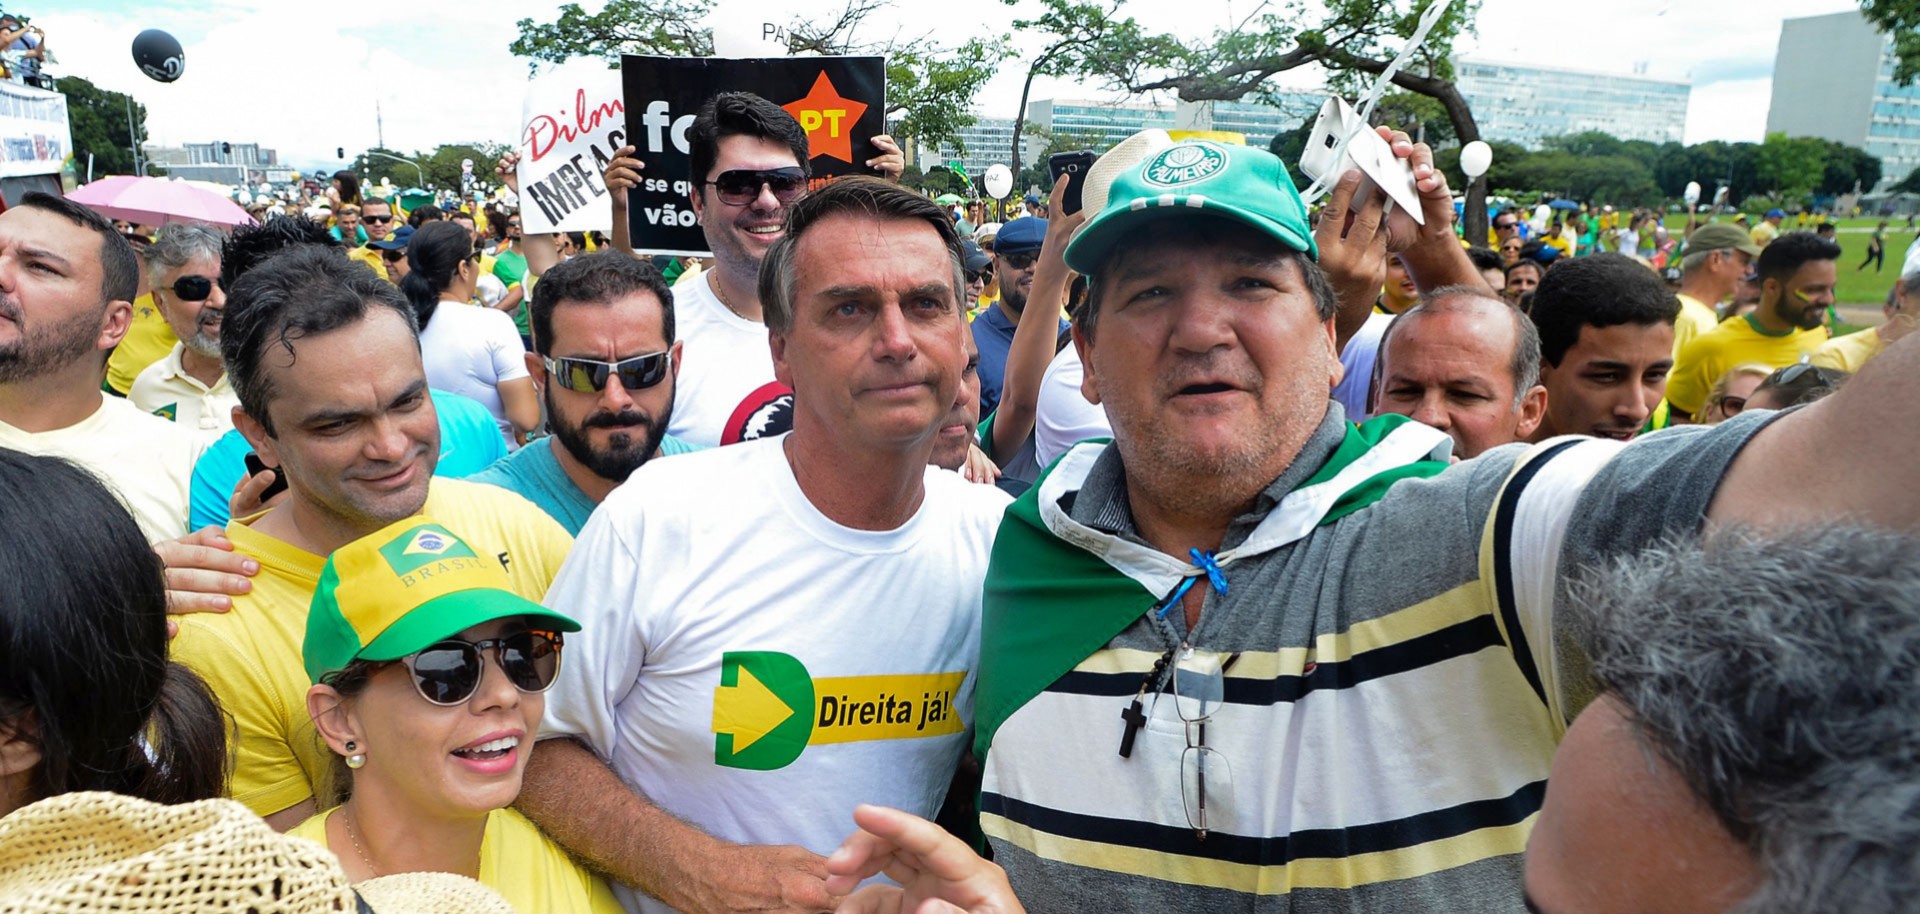 The Brazilian political scene is ripe for the rise of Jair Bolsonaro.